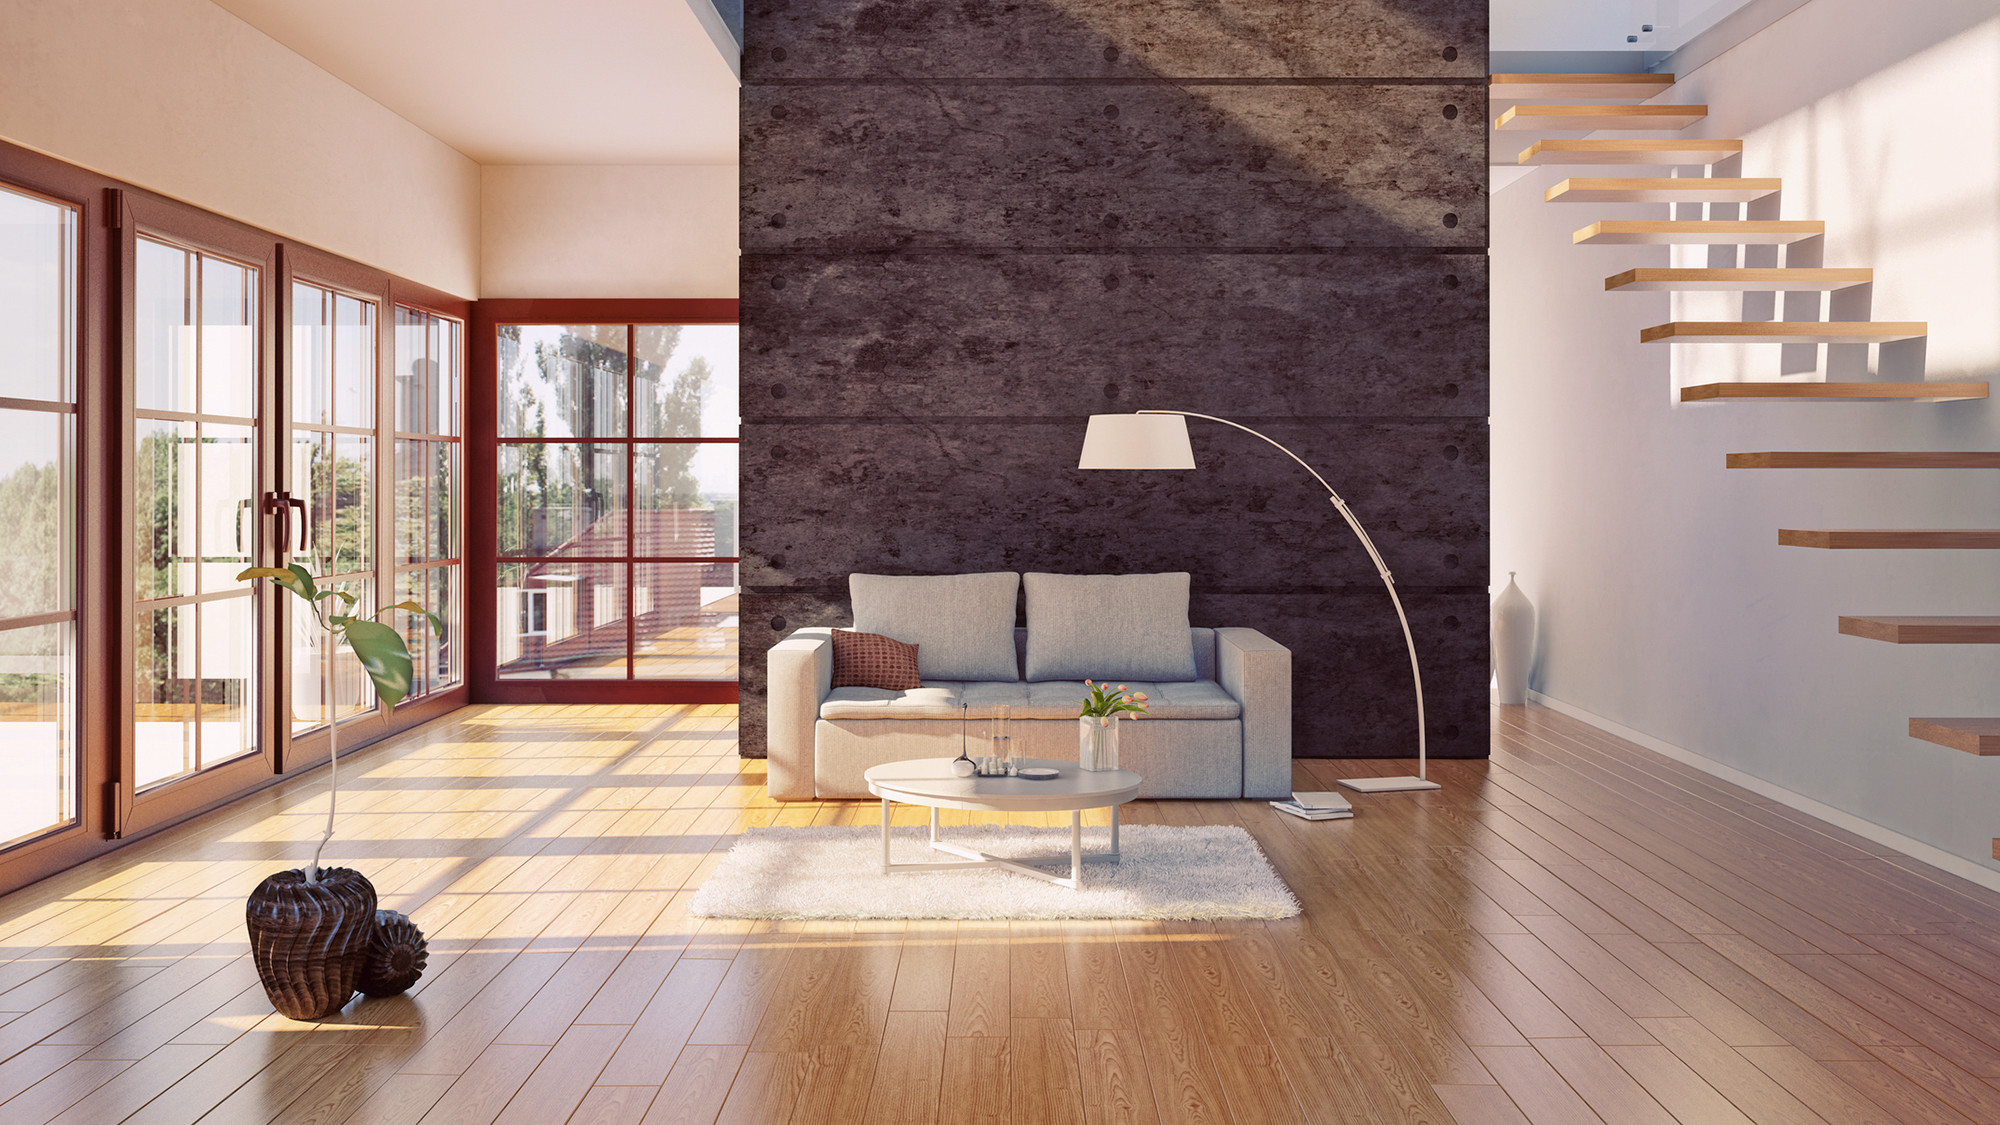 how much should refinishing hardwood floors cost of do hardwood floors provide the best return on investment realtor coma in hardwood floors investment